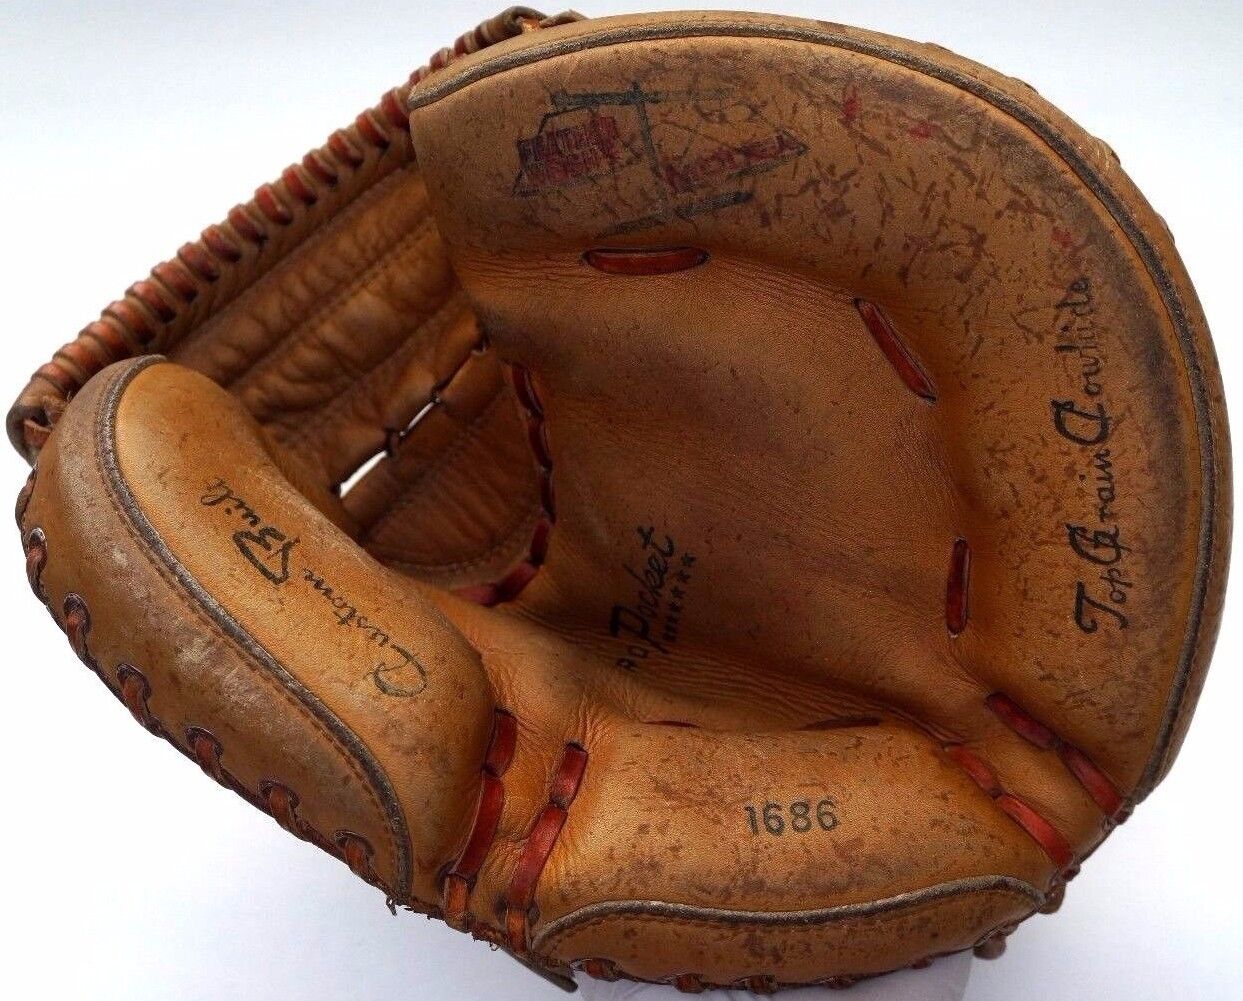 Vintage SEARS Roebuck CATCHER 1686 Baseball Glove Pro Pocket Top Grain Cowhide